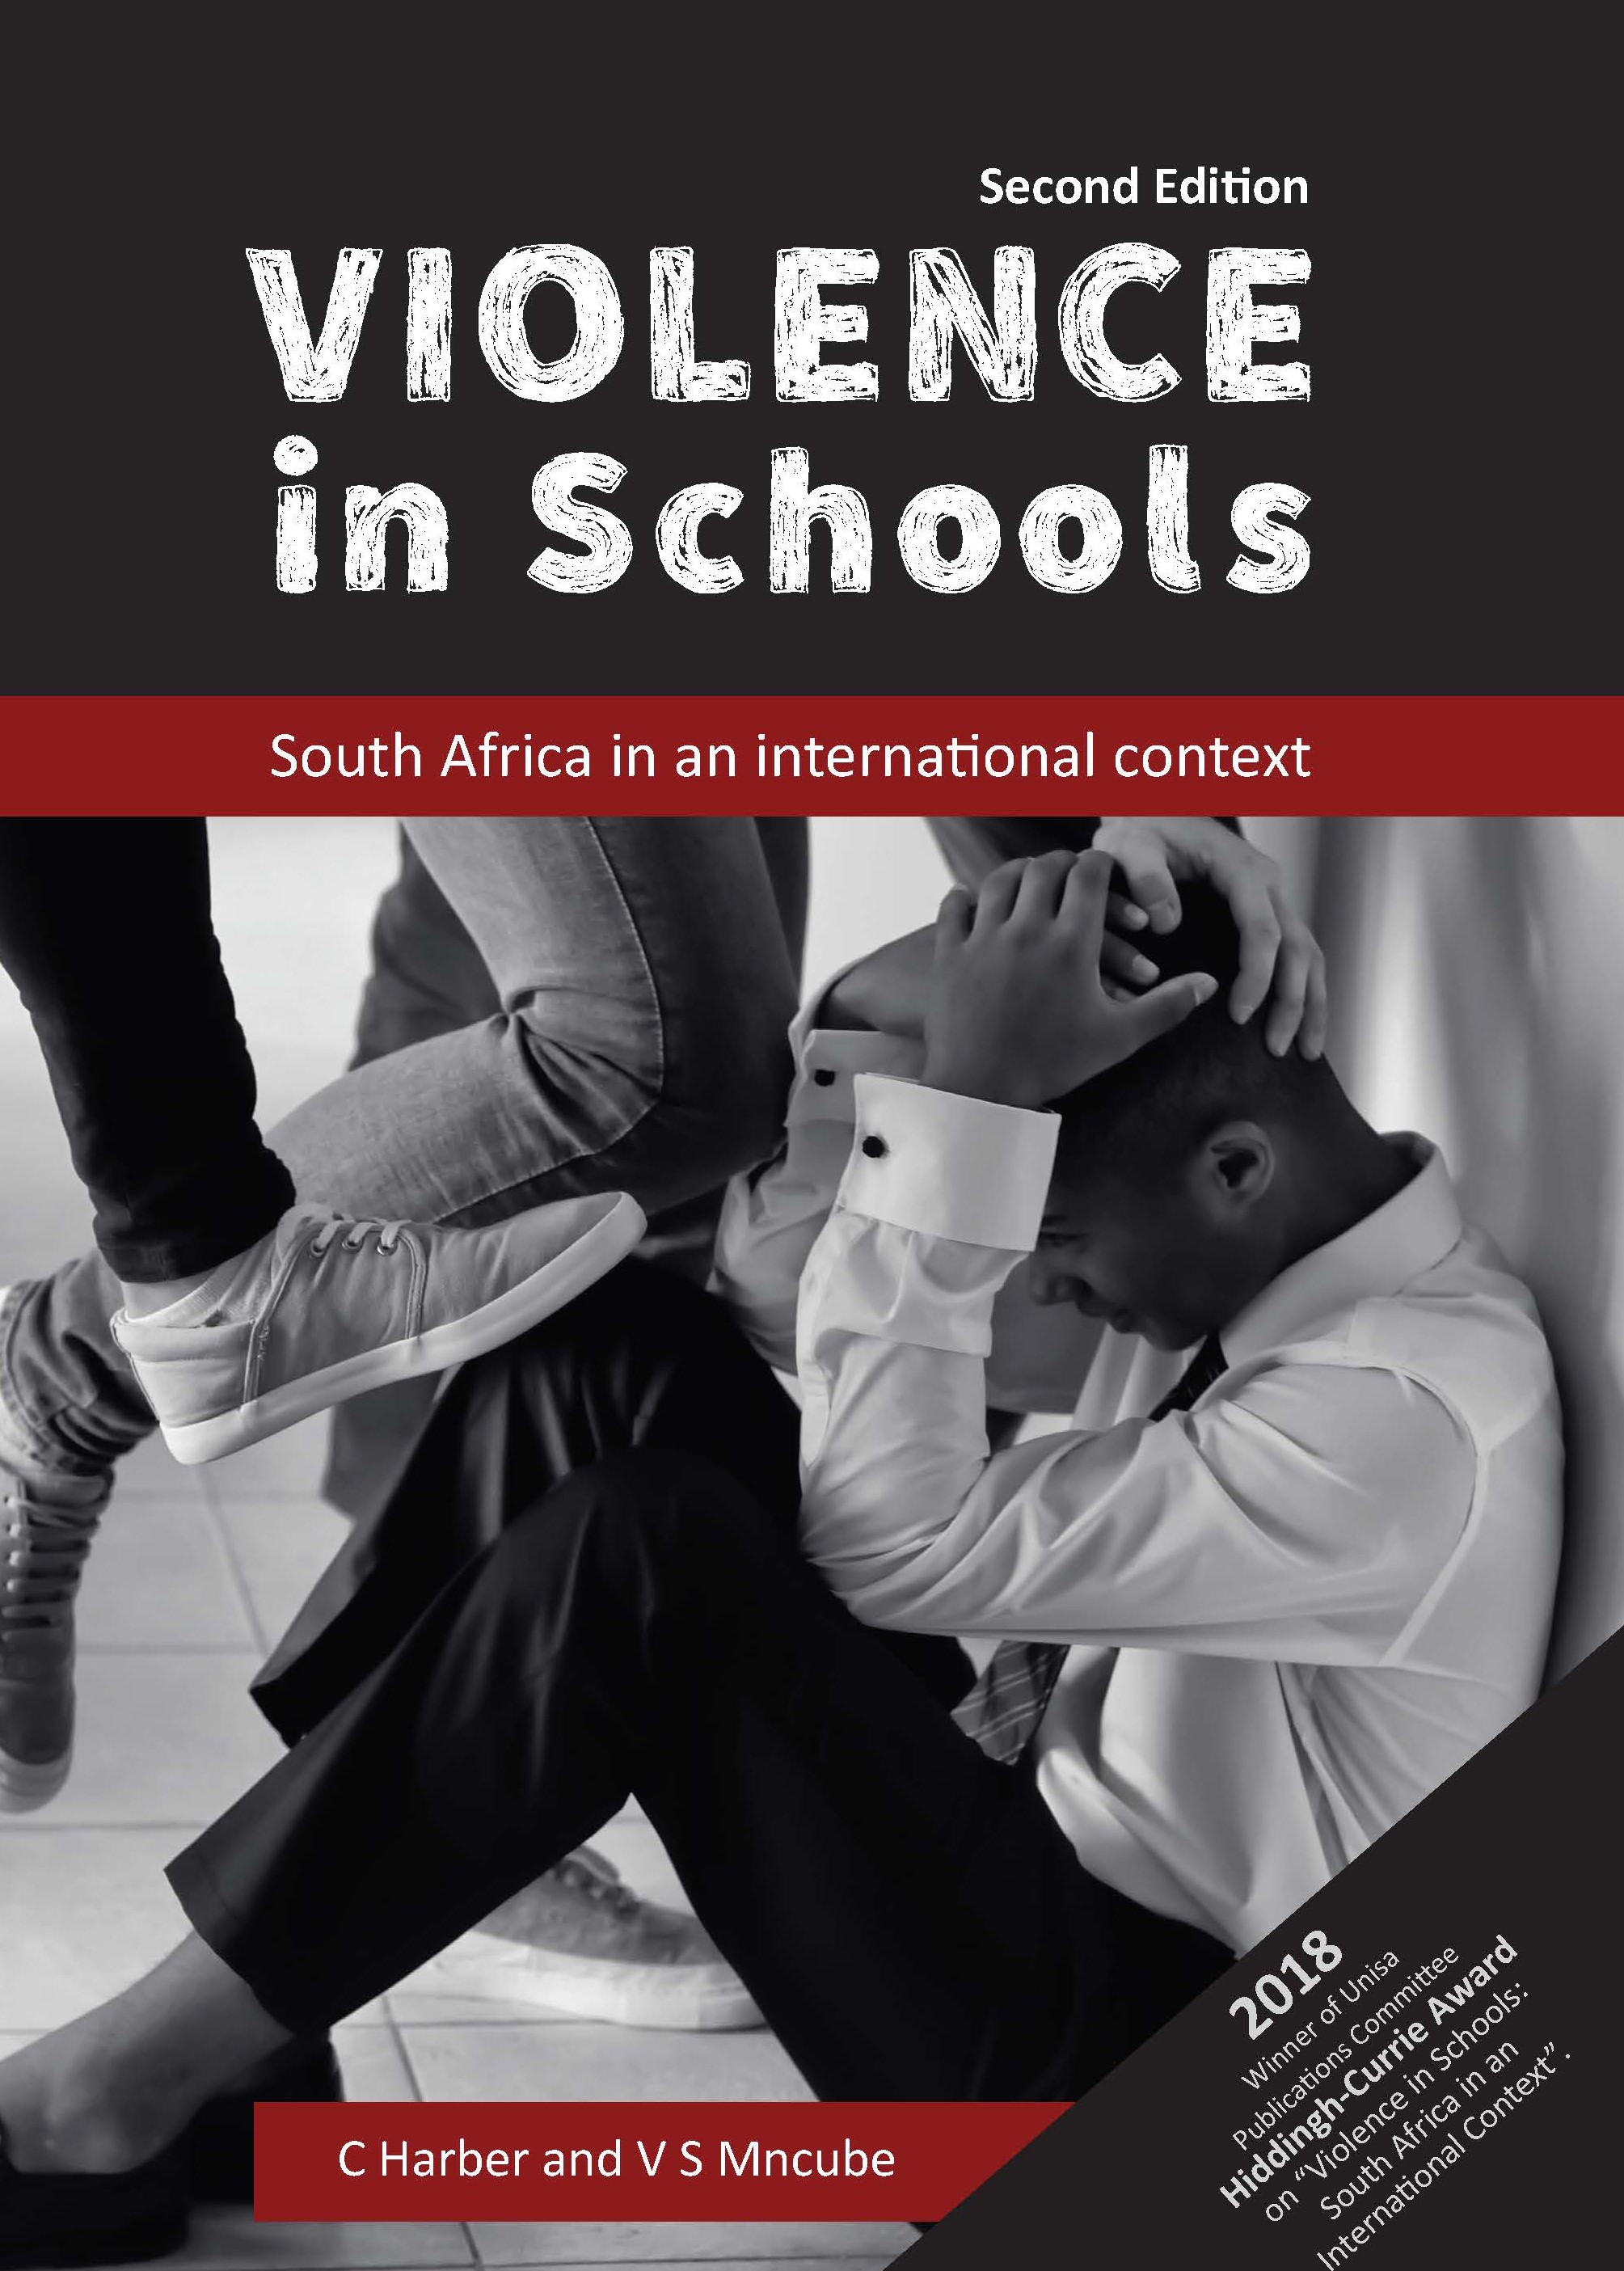 Violence in schools Vol 2 cover pg.jpg